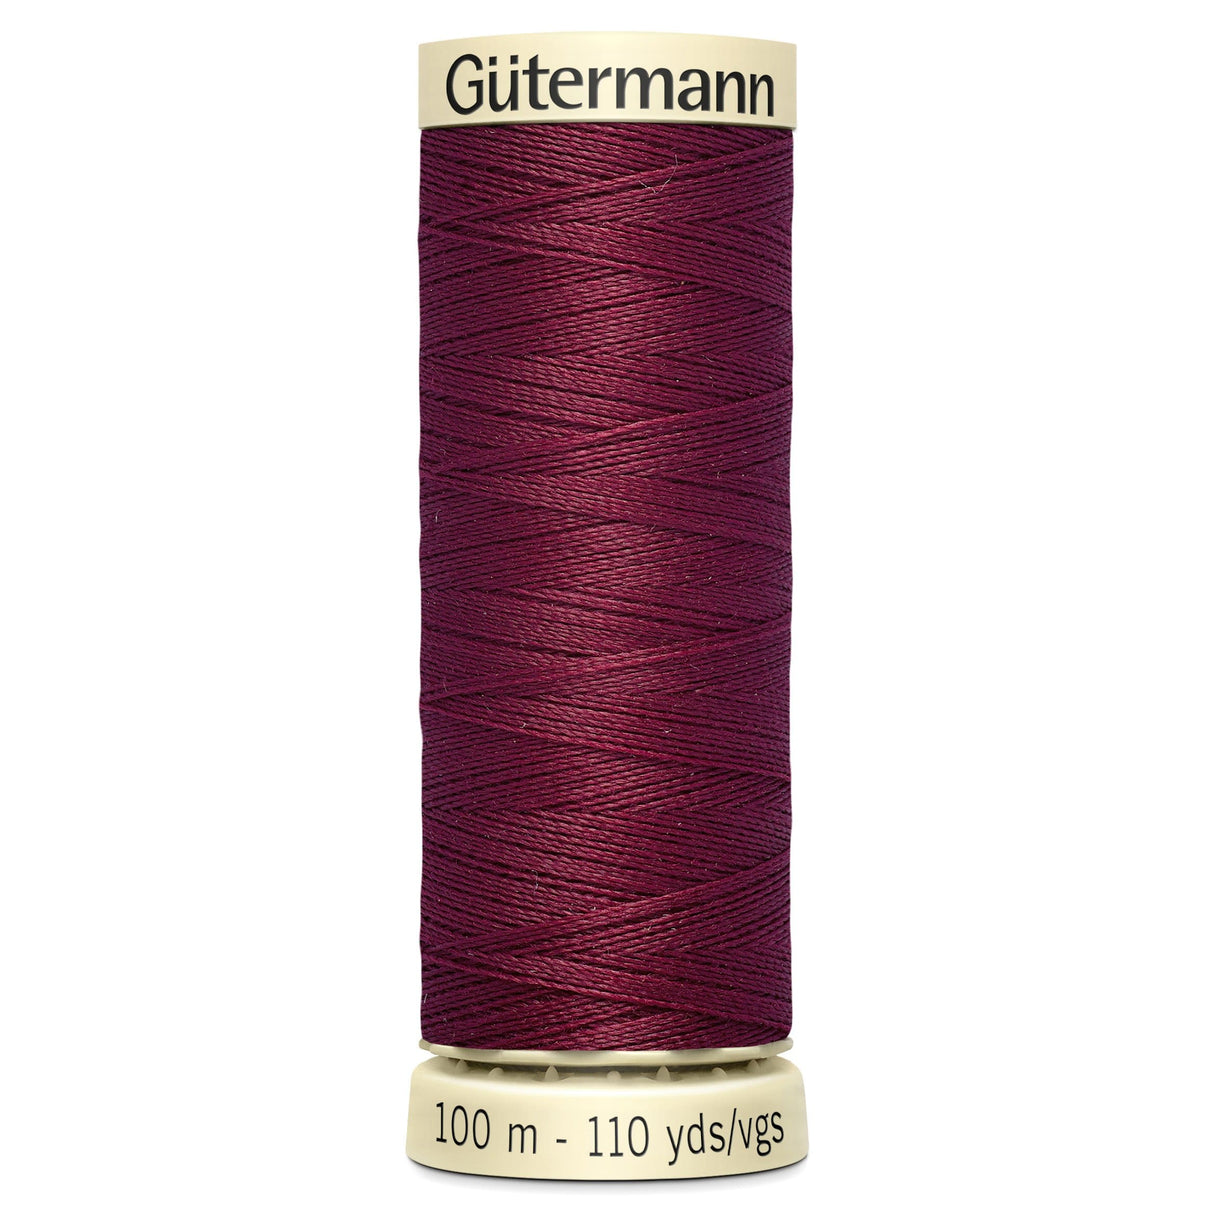 Groves Haberdashery 375 Gutermann Thread Sewing Cotton 100 m Black to Pink